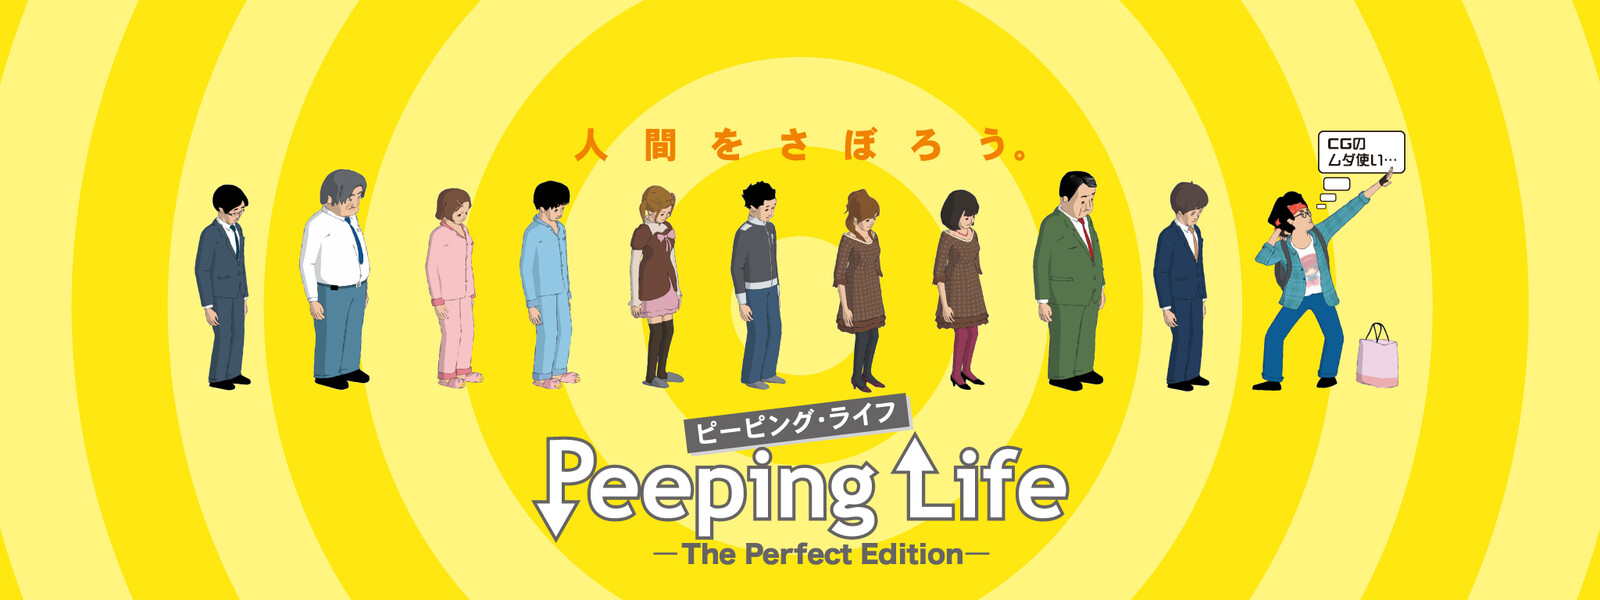 Peeping Life (ピーピング･ライフ) -The Perfect Edition- イエロー盤の動画 - Peeping Life (ピーピング・ライフ) -The Perfect Emotion-